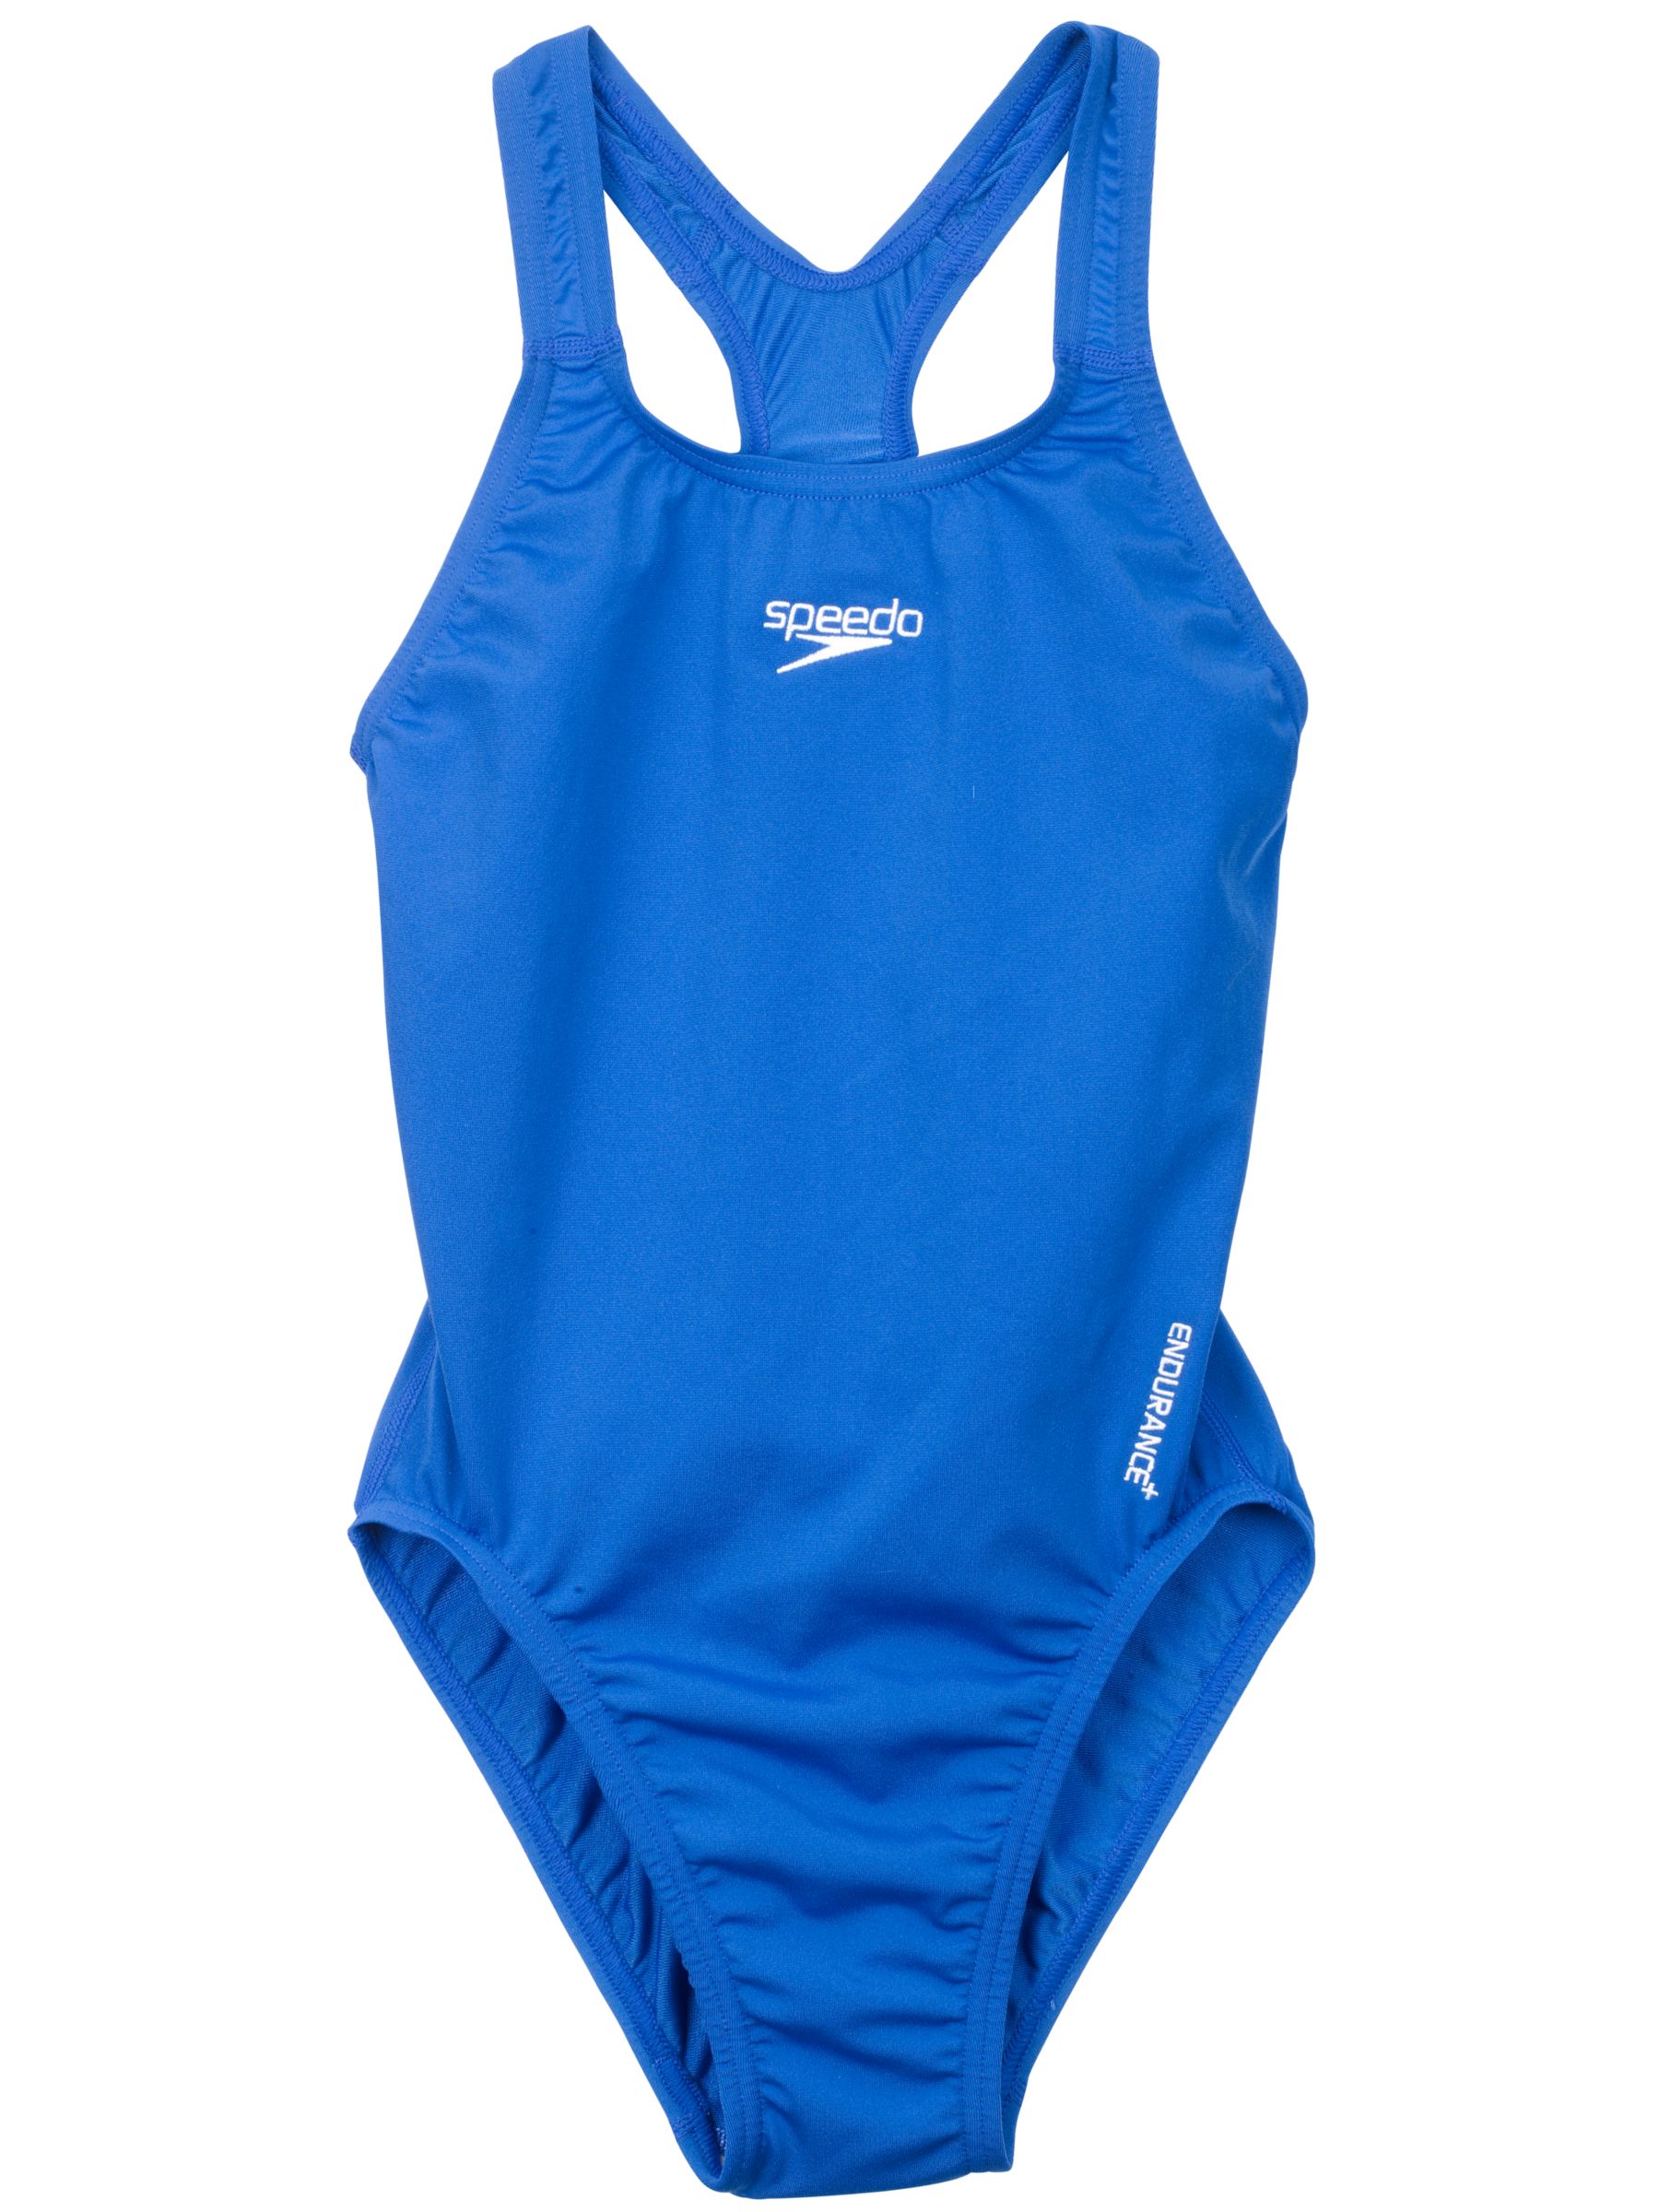 Speedo Medalist Swimsuit, Blue